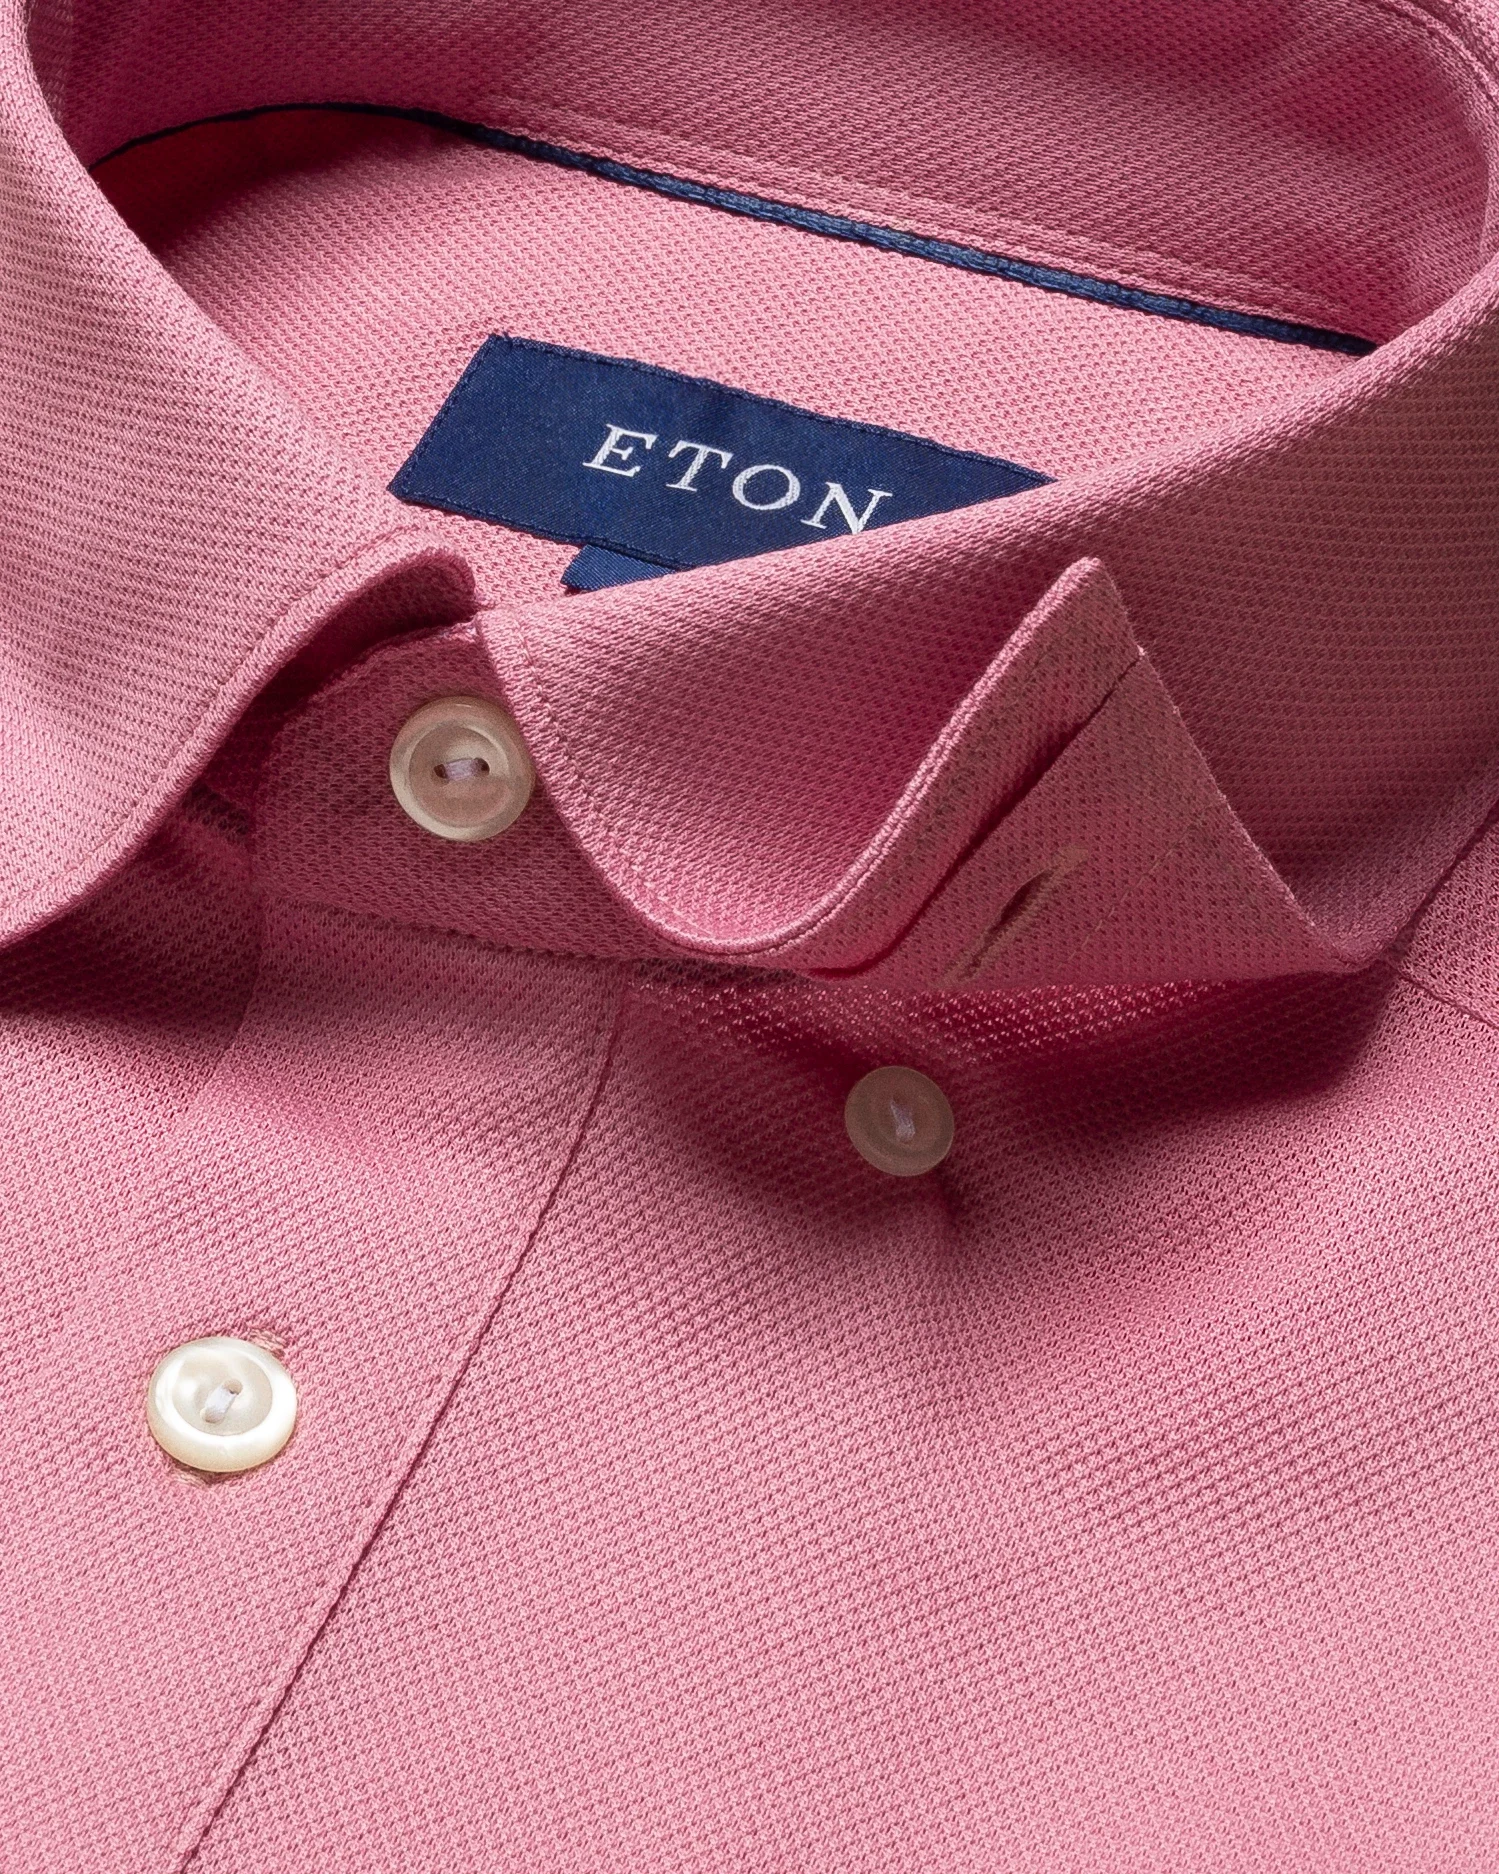 Eton - pink polo shirt